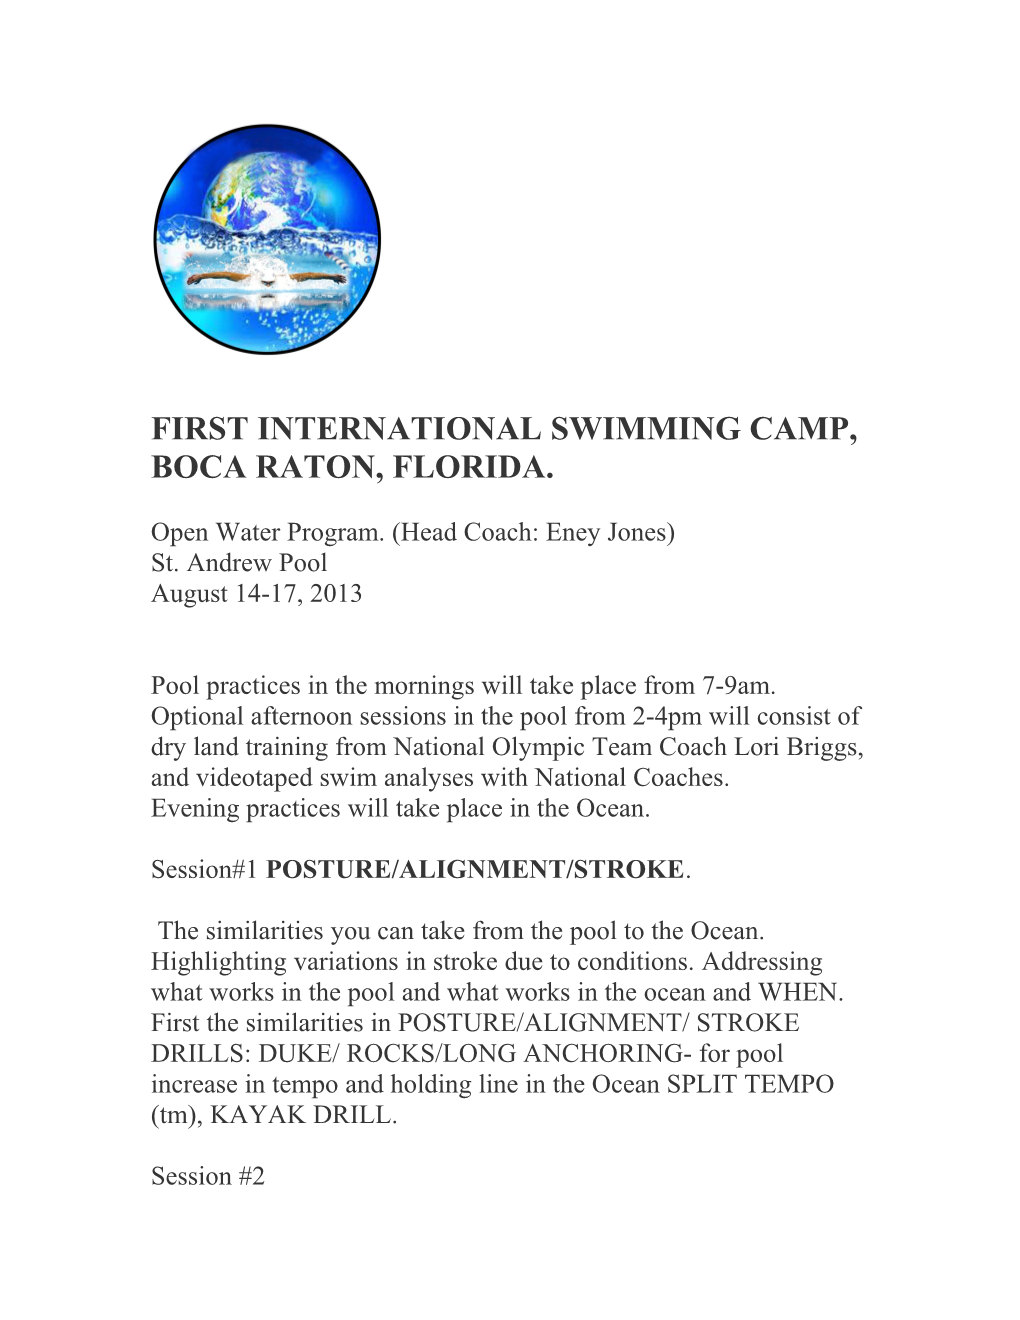 First International Swimming Camp, Boca Raton, Florida